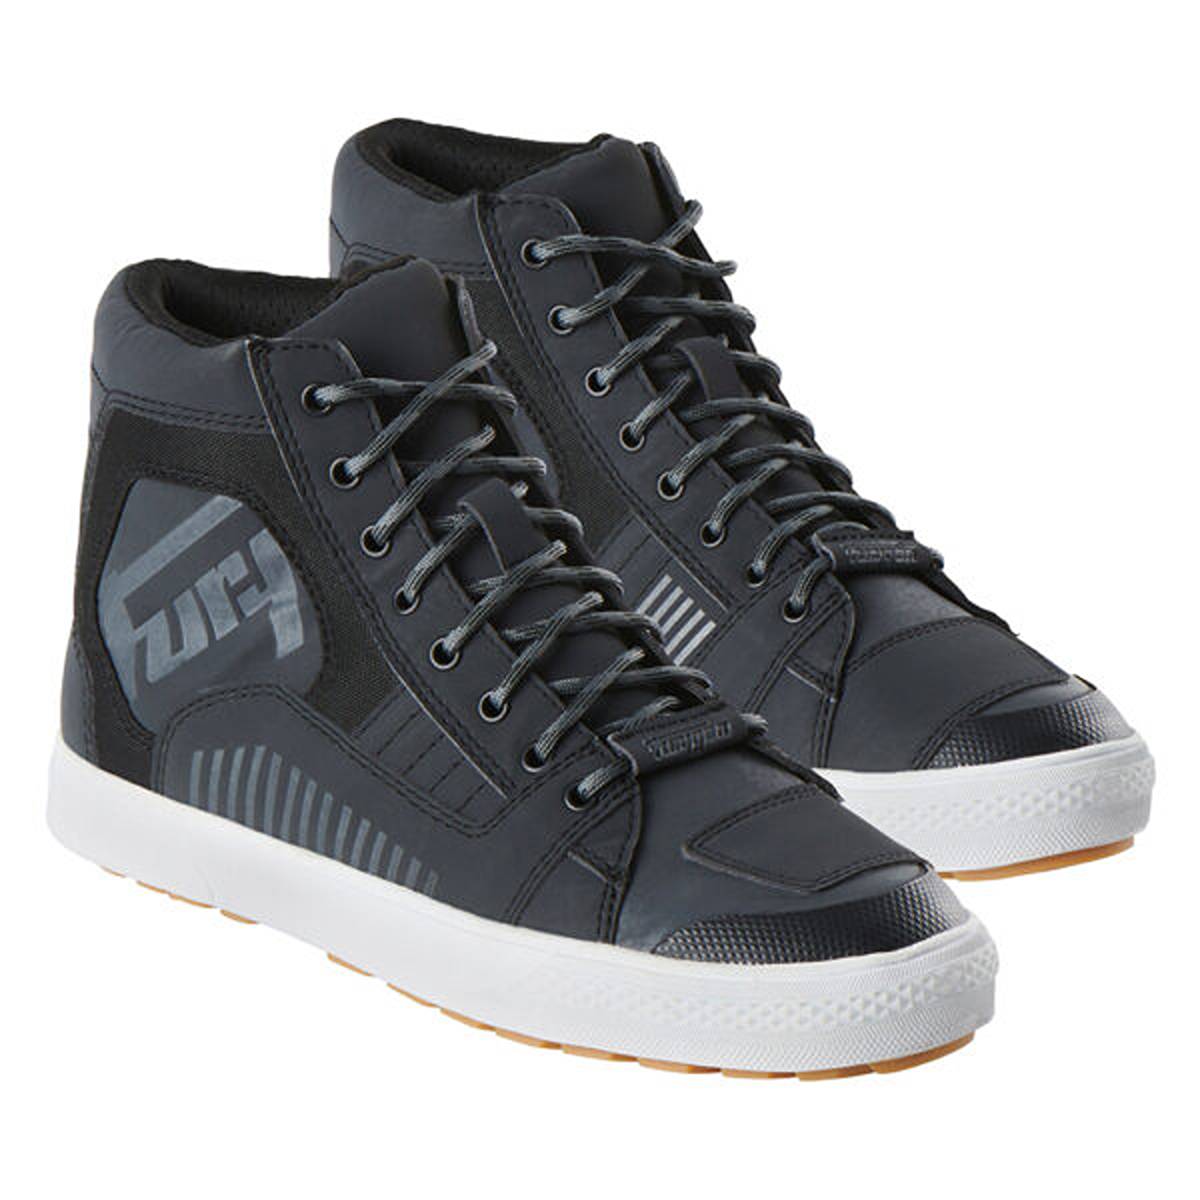 Image of Furygan Sacramento D30 Shoes Black Size 47 ID 3435980368326